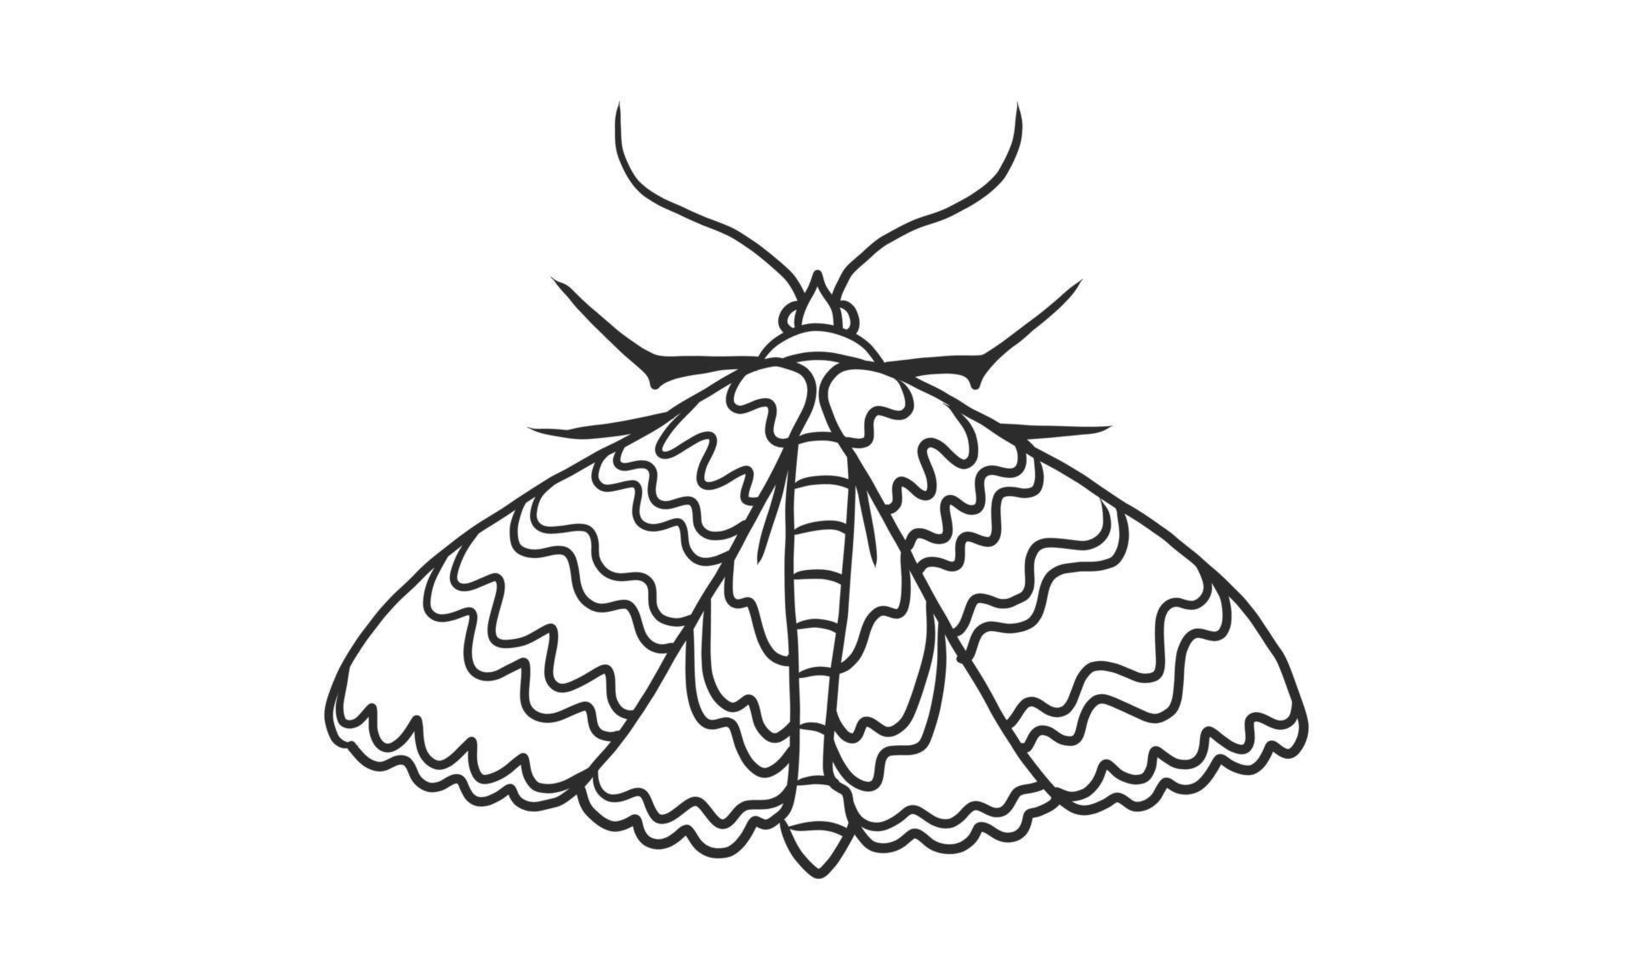 Moth illustrated in line art vector